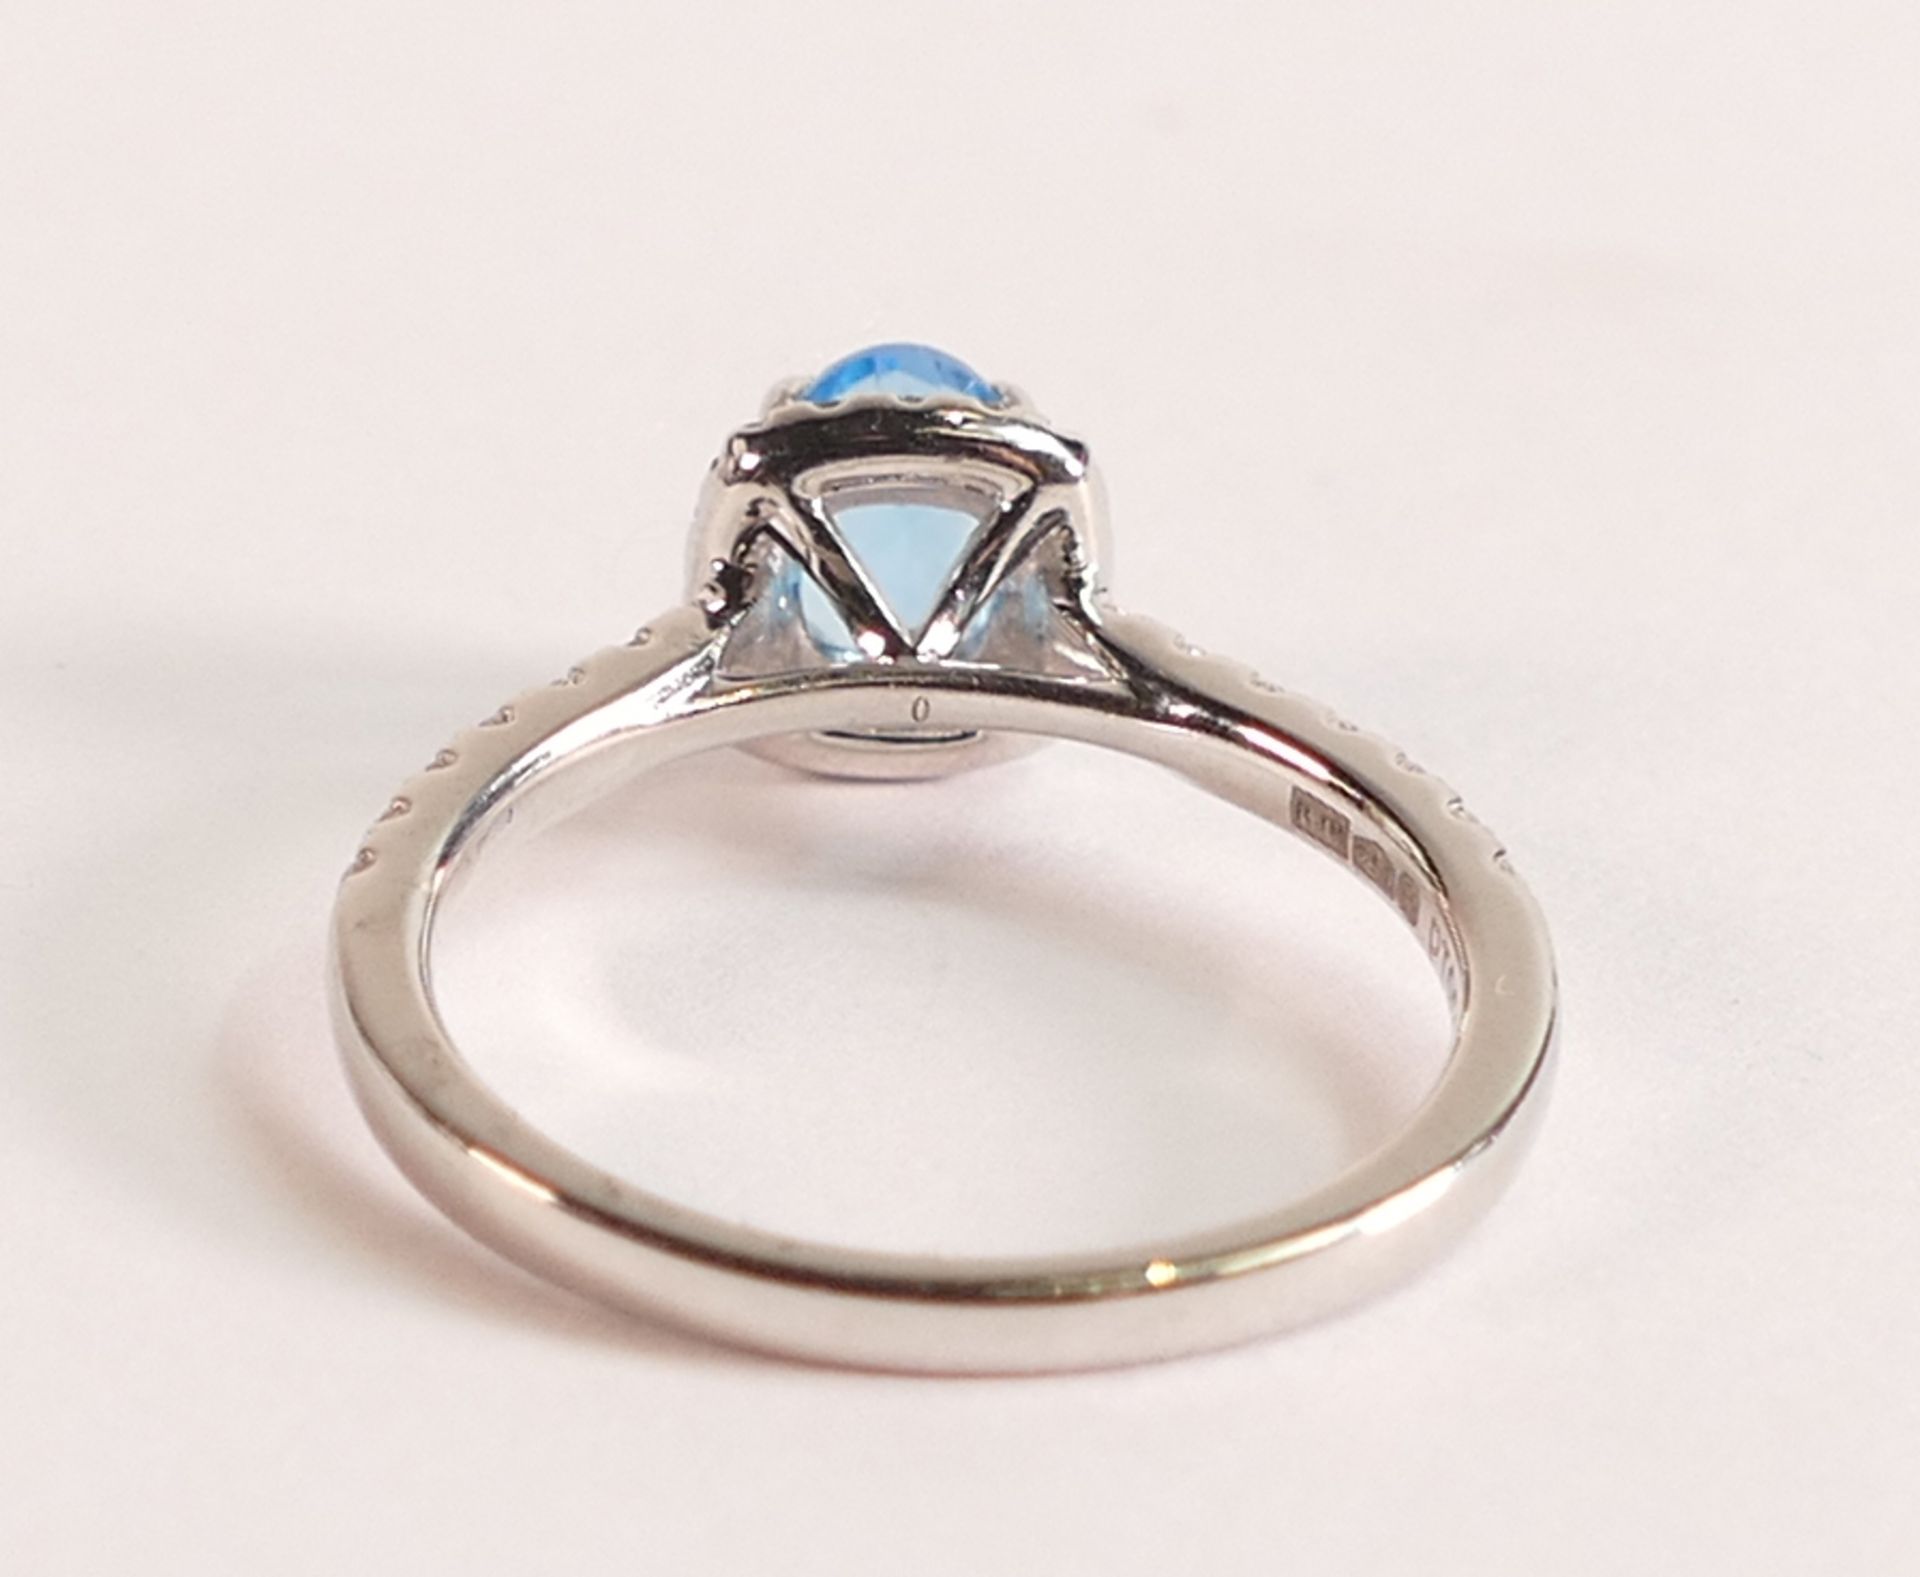 Oval Aquamarine And Diamond Platinum Ring - Aquamarine stone dimensions 7.15mm x 5.25mm. Diamond - Image 3 of 3